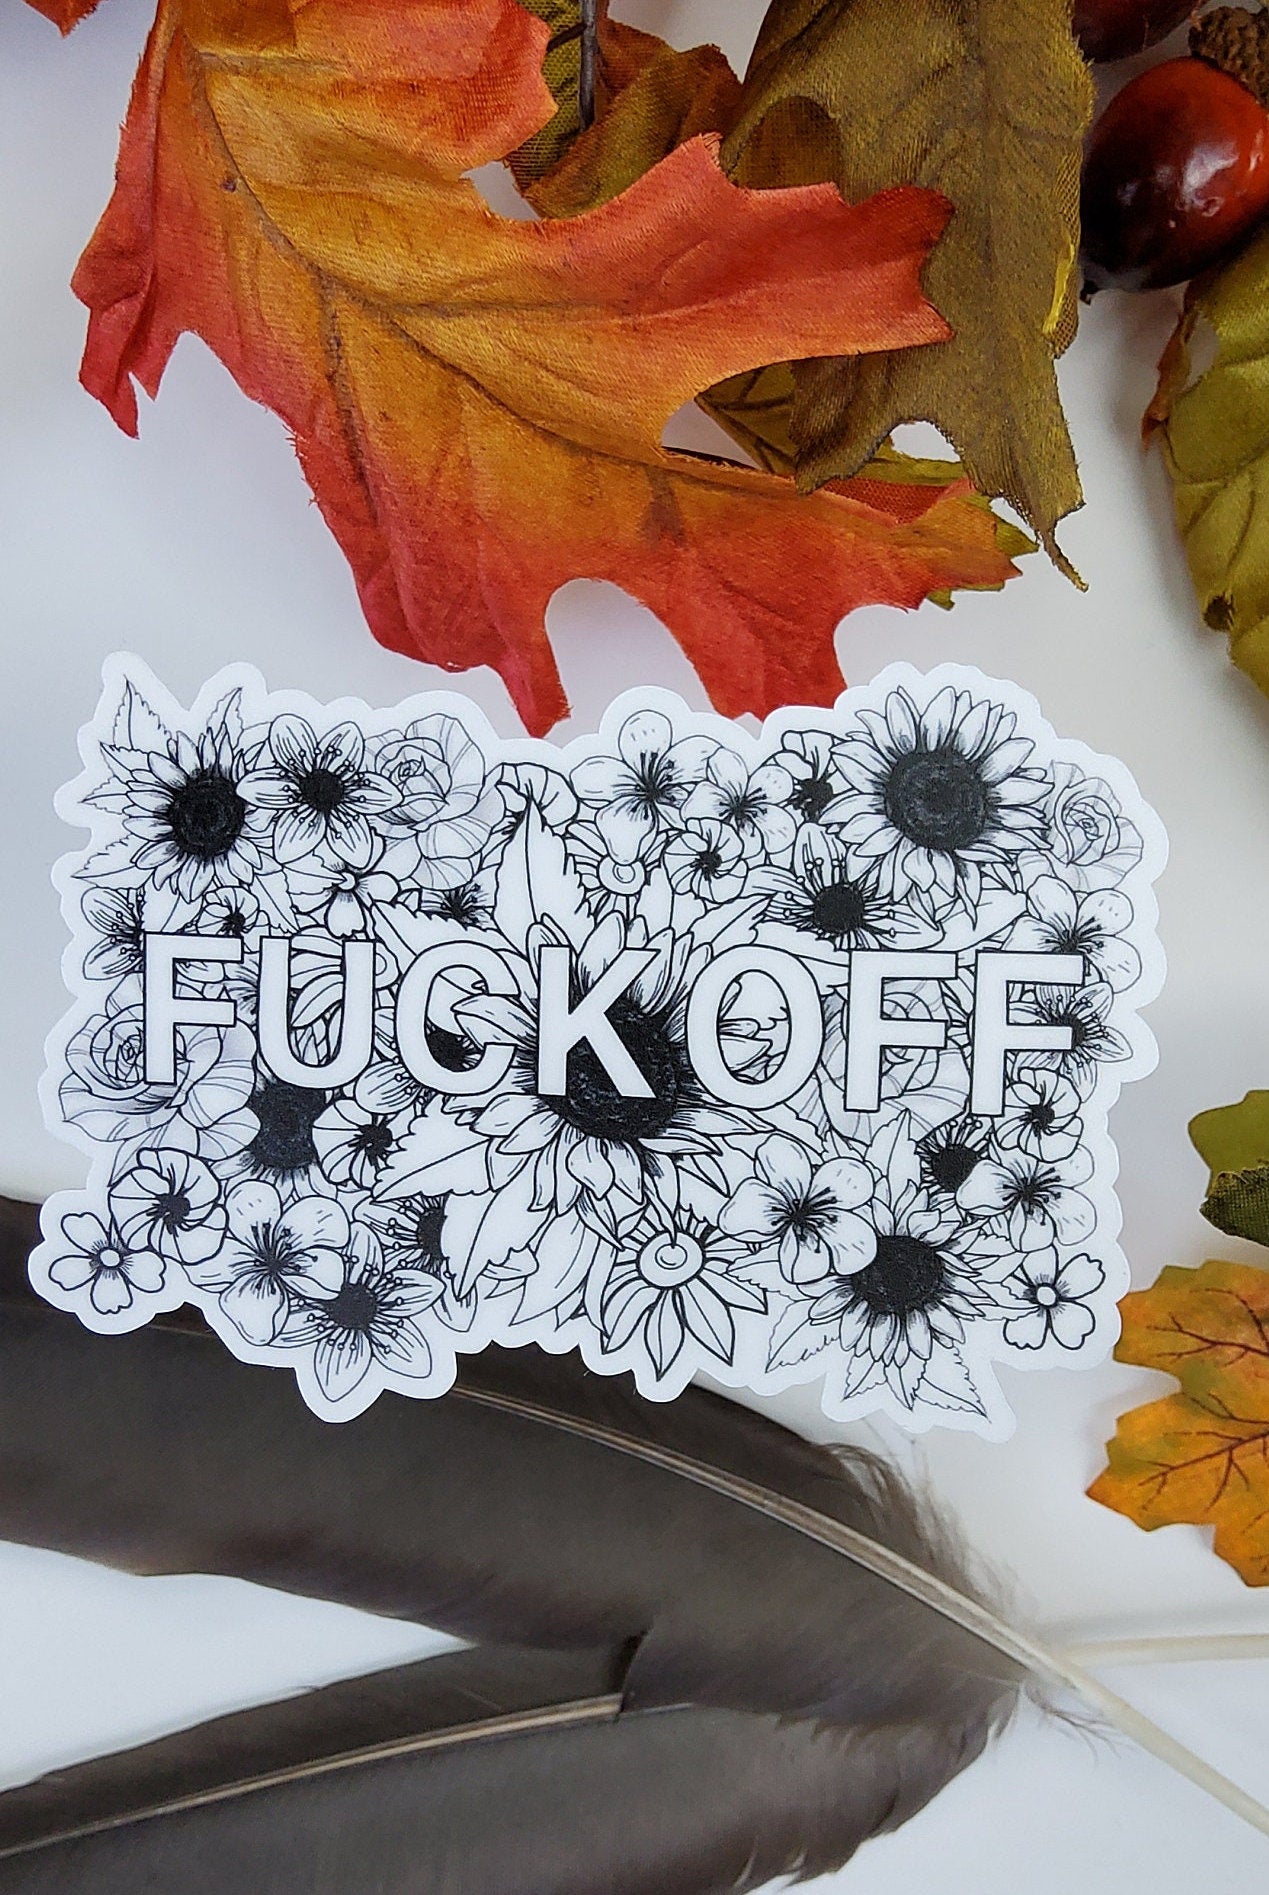 MATTE STICKER: Fuck Off Sticker , Floral Fuck Off Sticker , Profanity Sticker , Fuck Sticker , Eff Off Sticker , Sketchbook Sticker